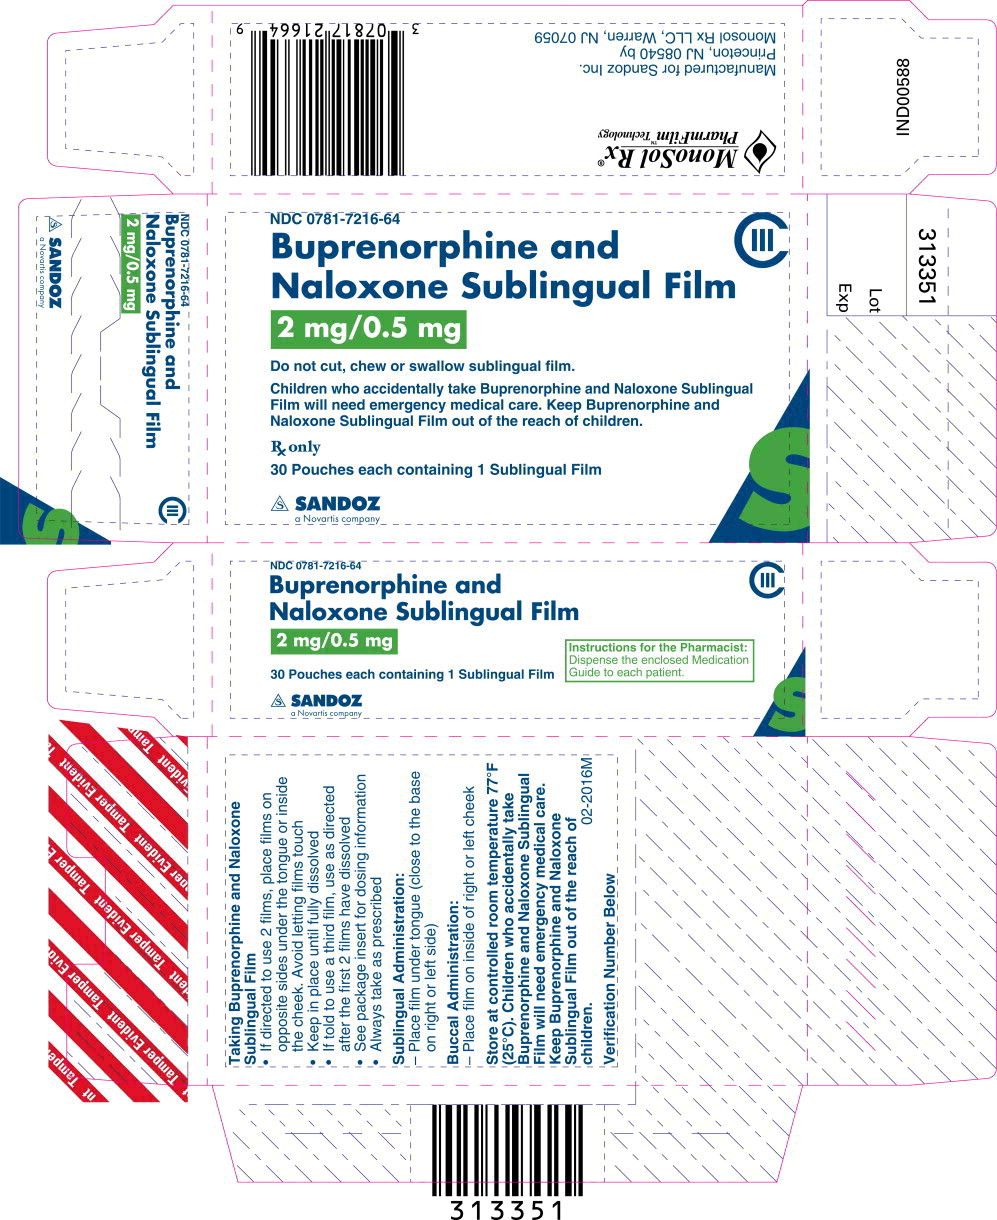 Principal Display Panel - Buprenorphine and Naloxone Sublingual Film 2 mg/0.5 mg Carton Label
